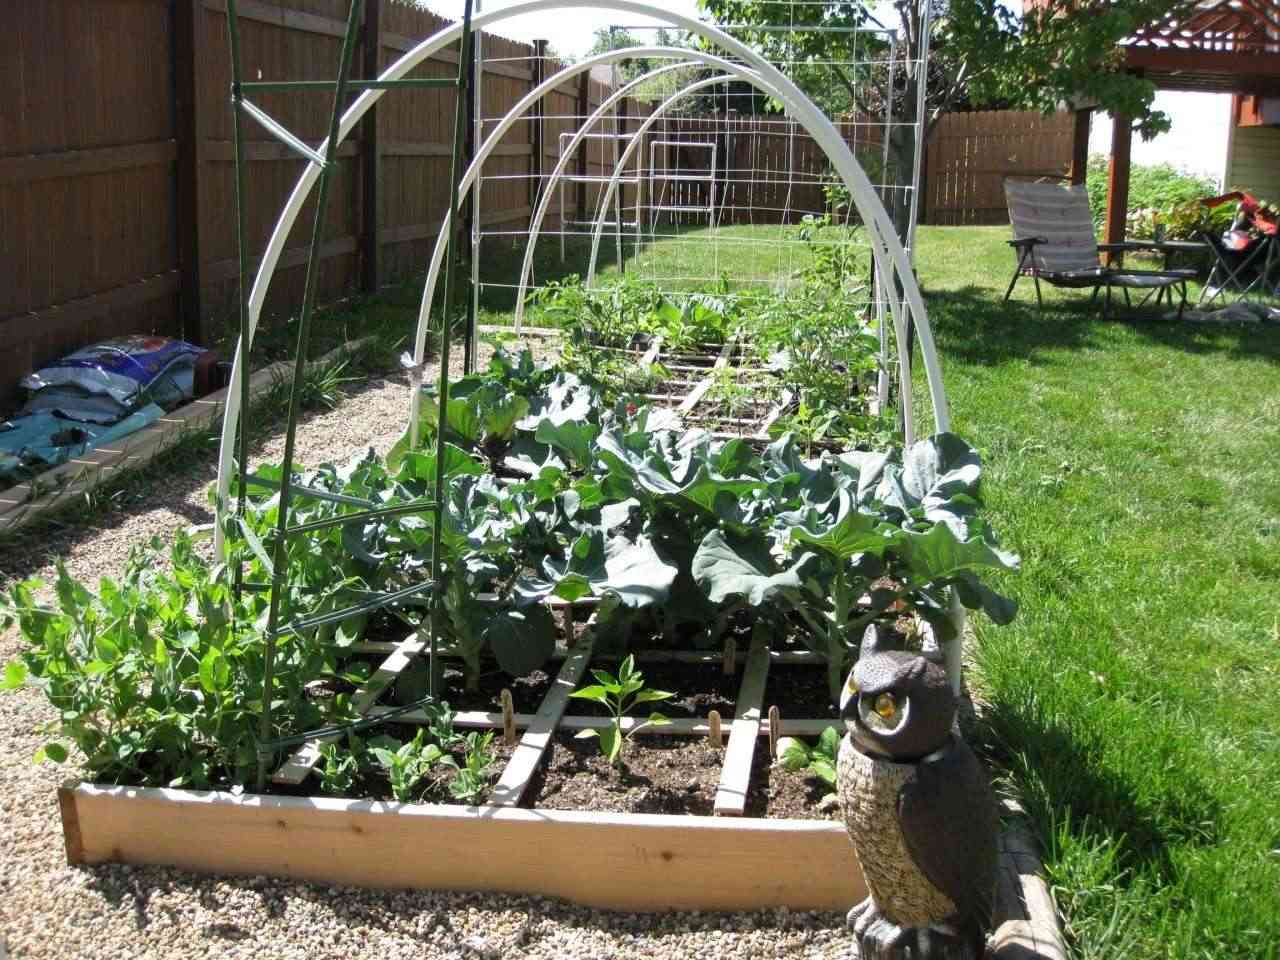 strawberries - My transformed row garden to a beautiful SFG Img_4612